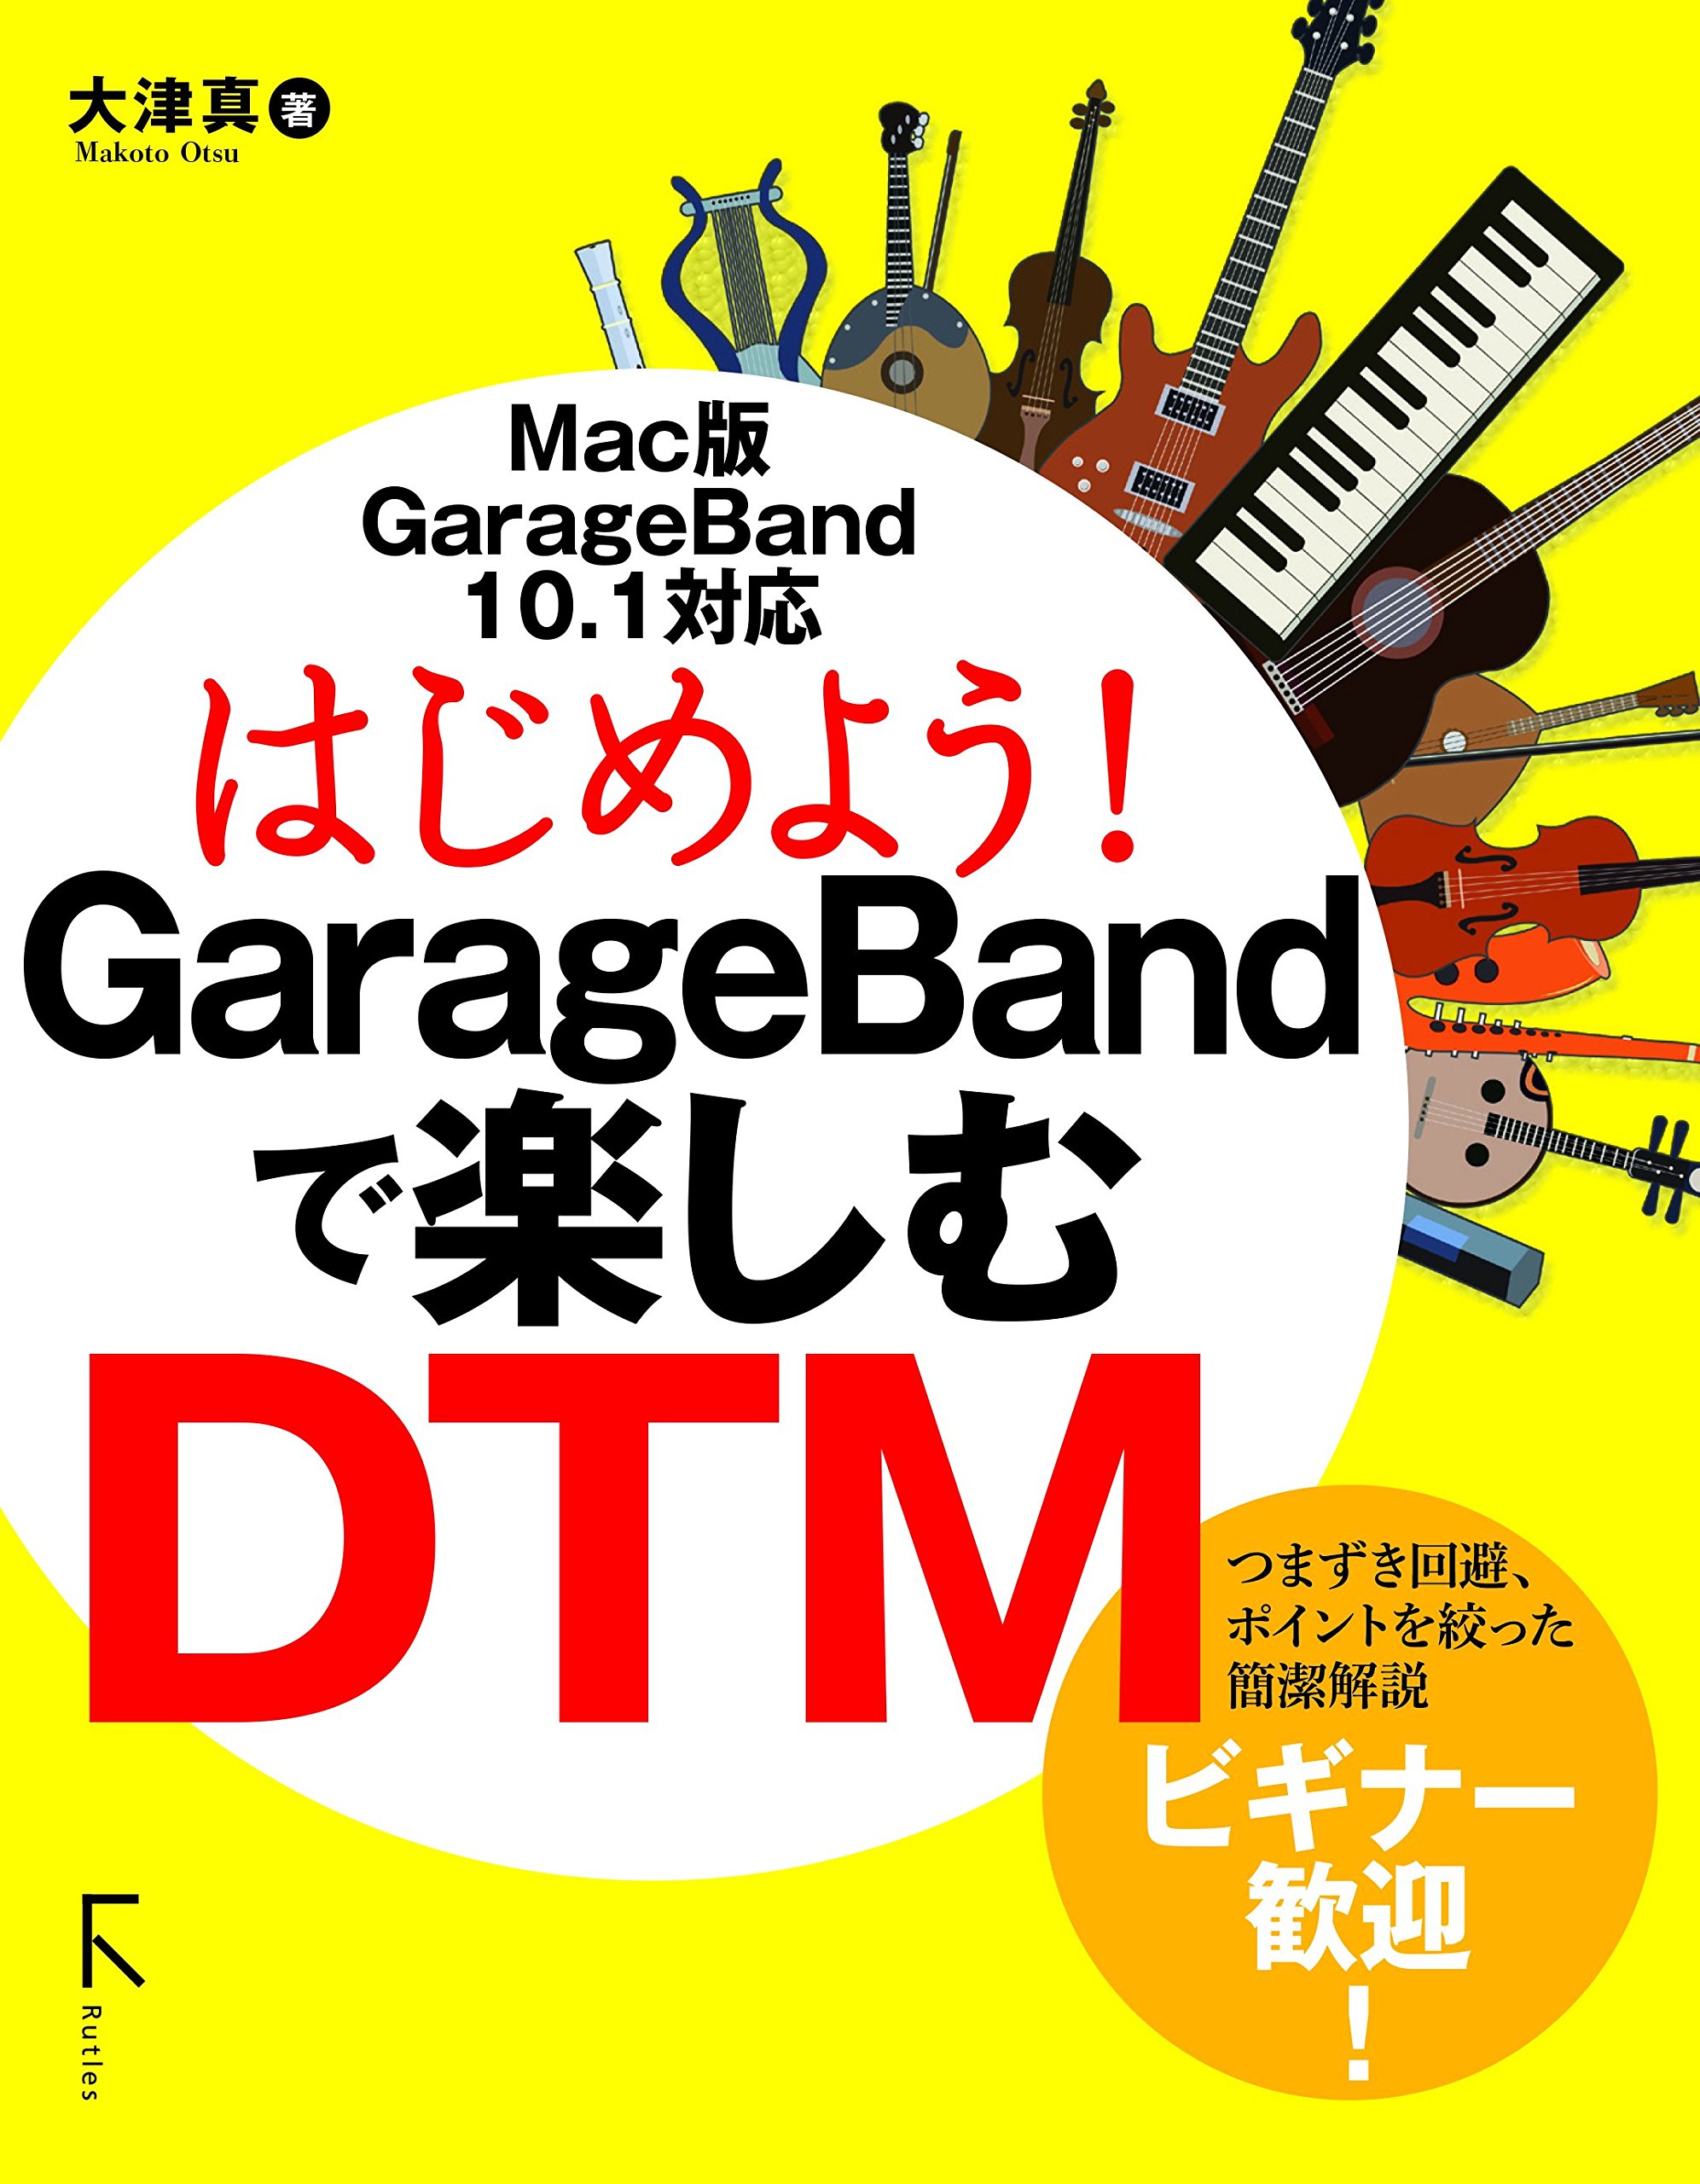  let's start! GarageBand. comfort DTM